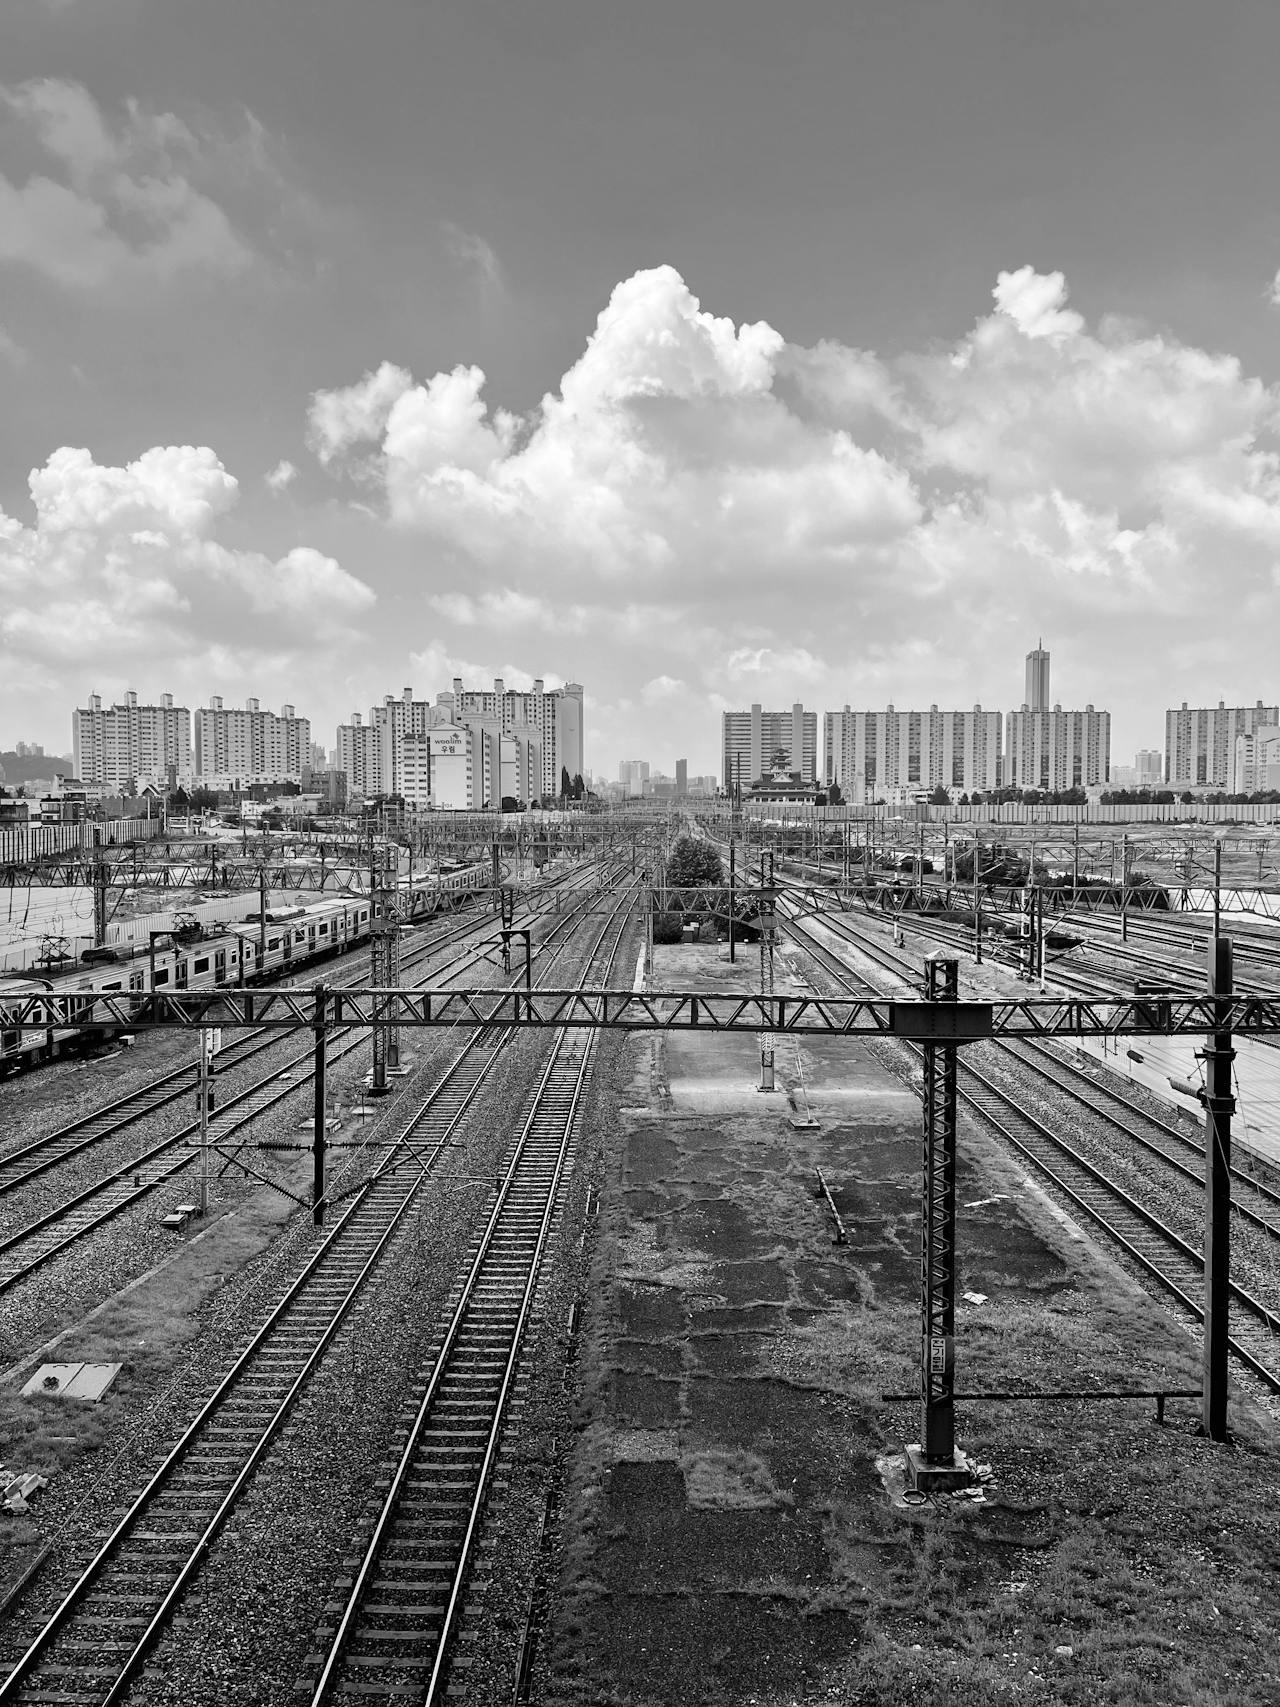 View of the train tracks at Yongsan Station